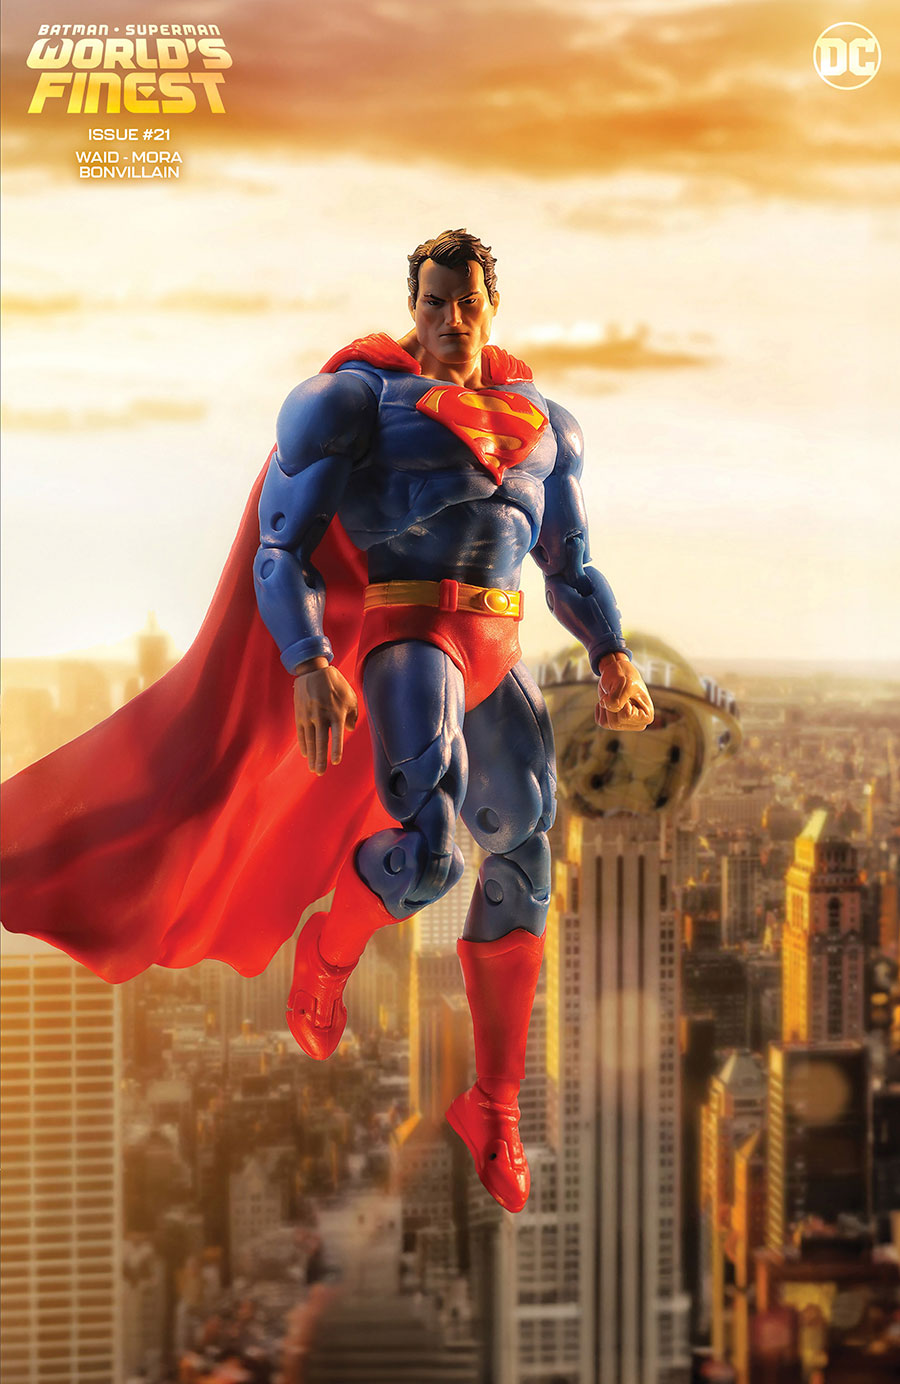 Batman Superman Worlds Finest #21 Cover D Variant Hush Superman McFarlane Toys Action Figure Card Stock Cover